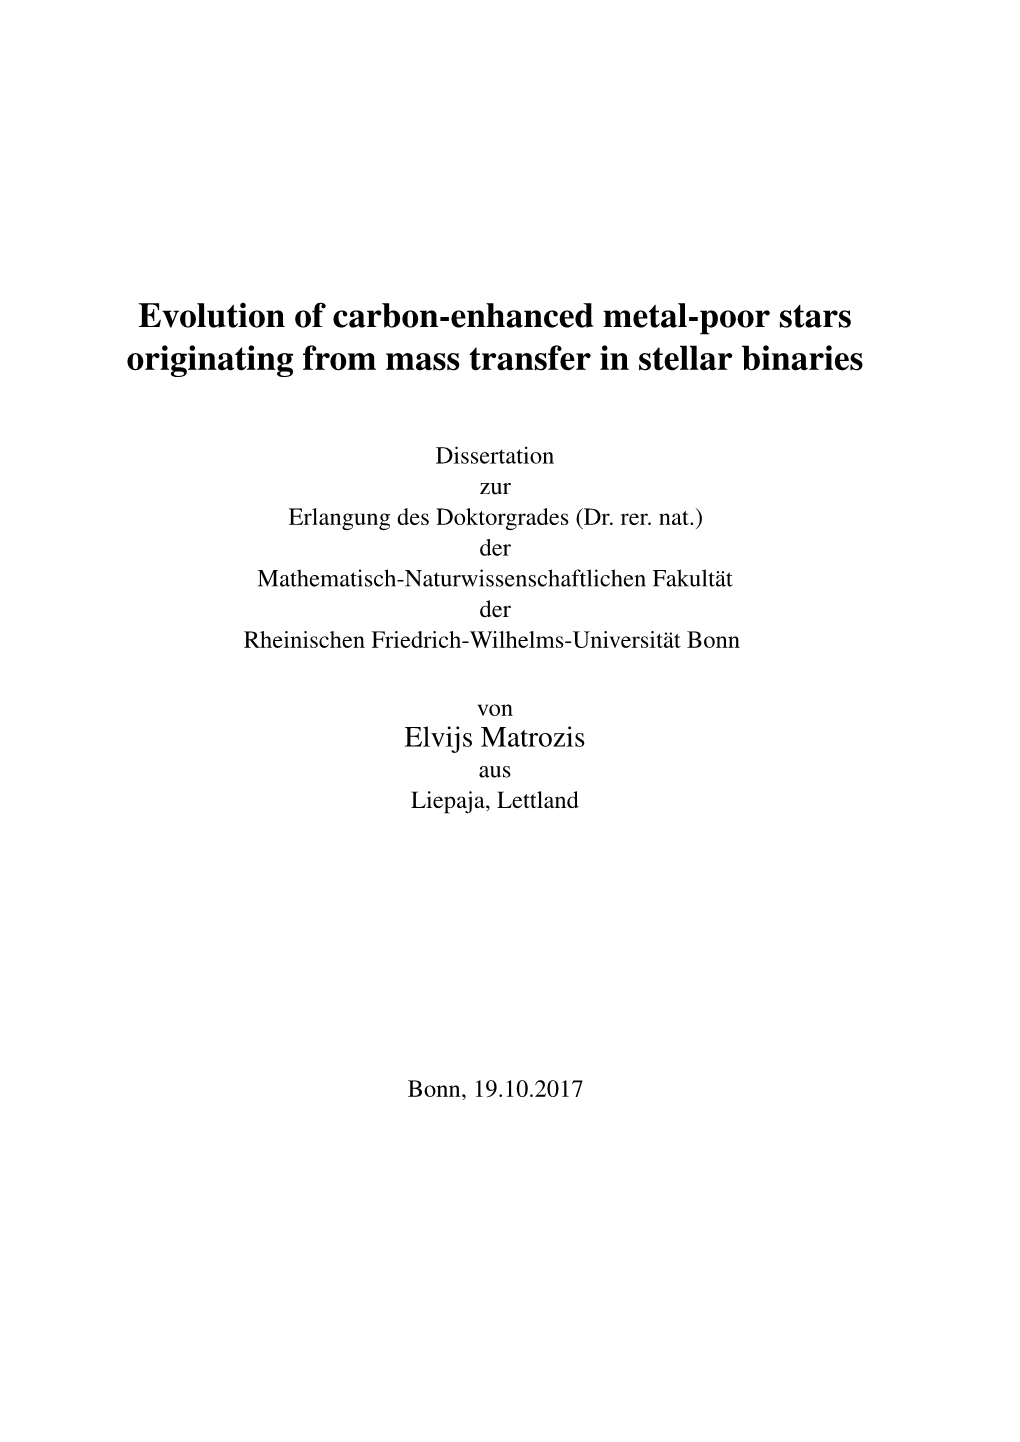 Evolution of Carbon-Enhanced Metal-Poor Stars Originating from Mass Transfer in Stellar Binaries